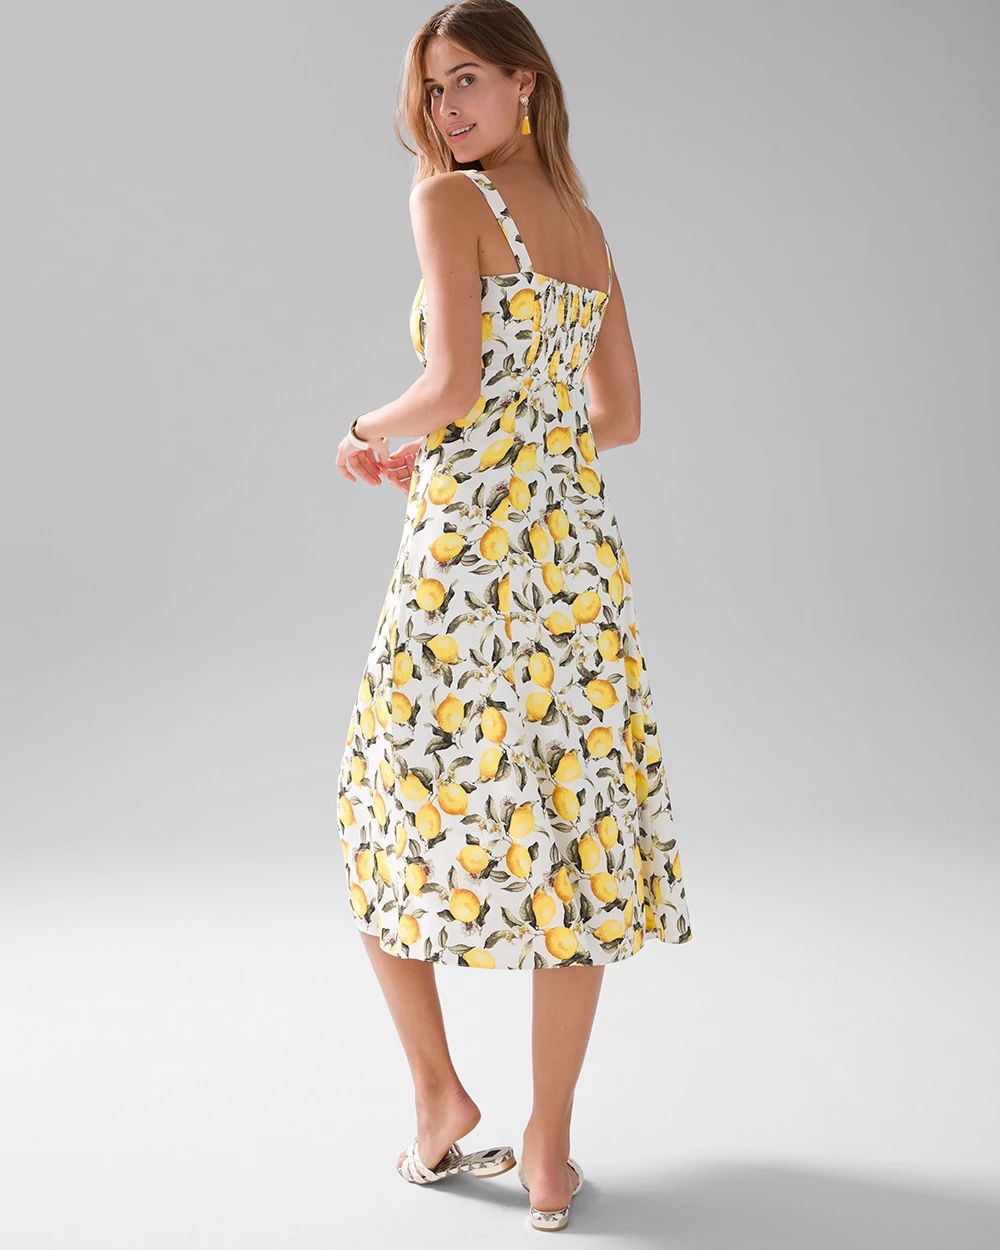 Lemon Print Tie-Front Midi Dress click to view larger image.